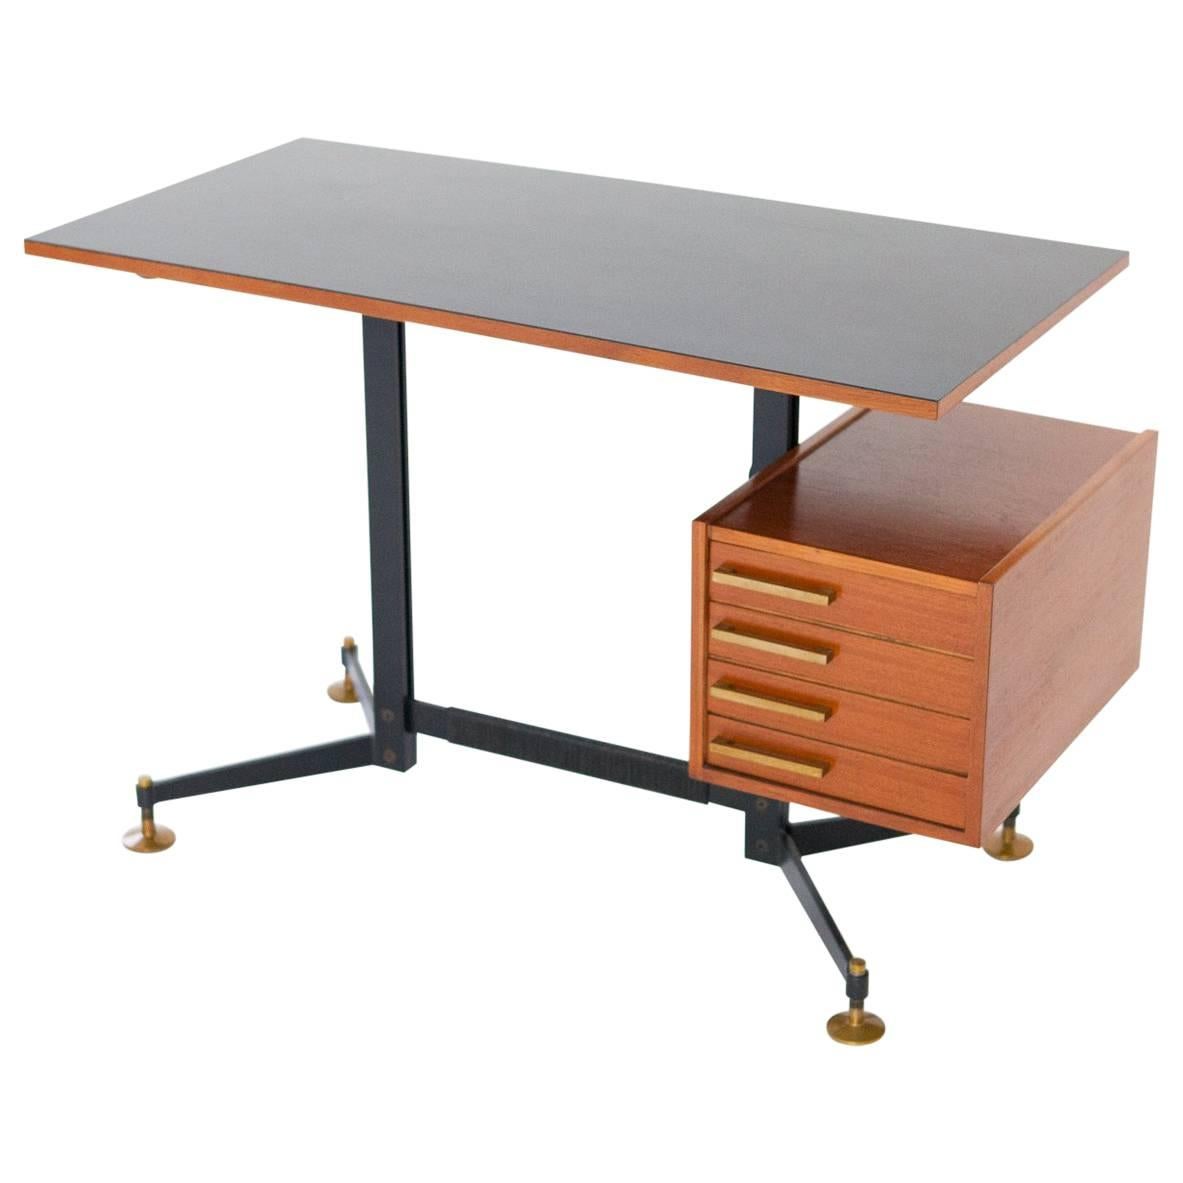 Italian Mid-Century Modern Desk Table Chest of Drawers Iron Teak Formica, 1950s